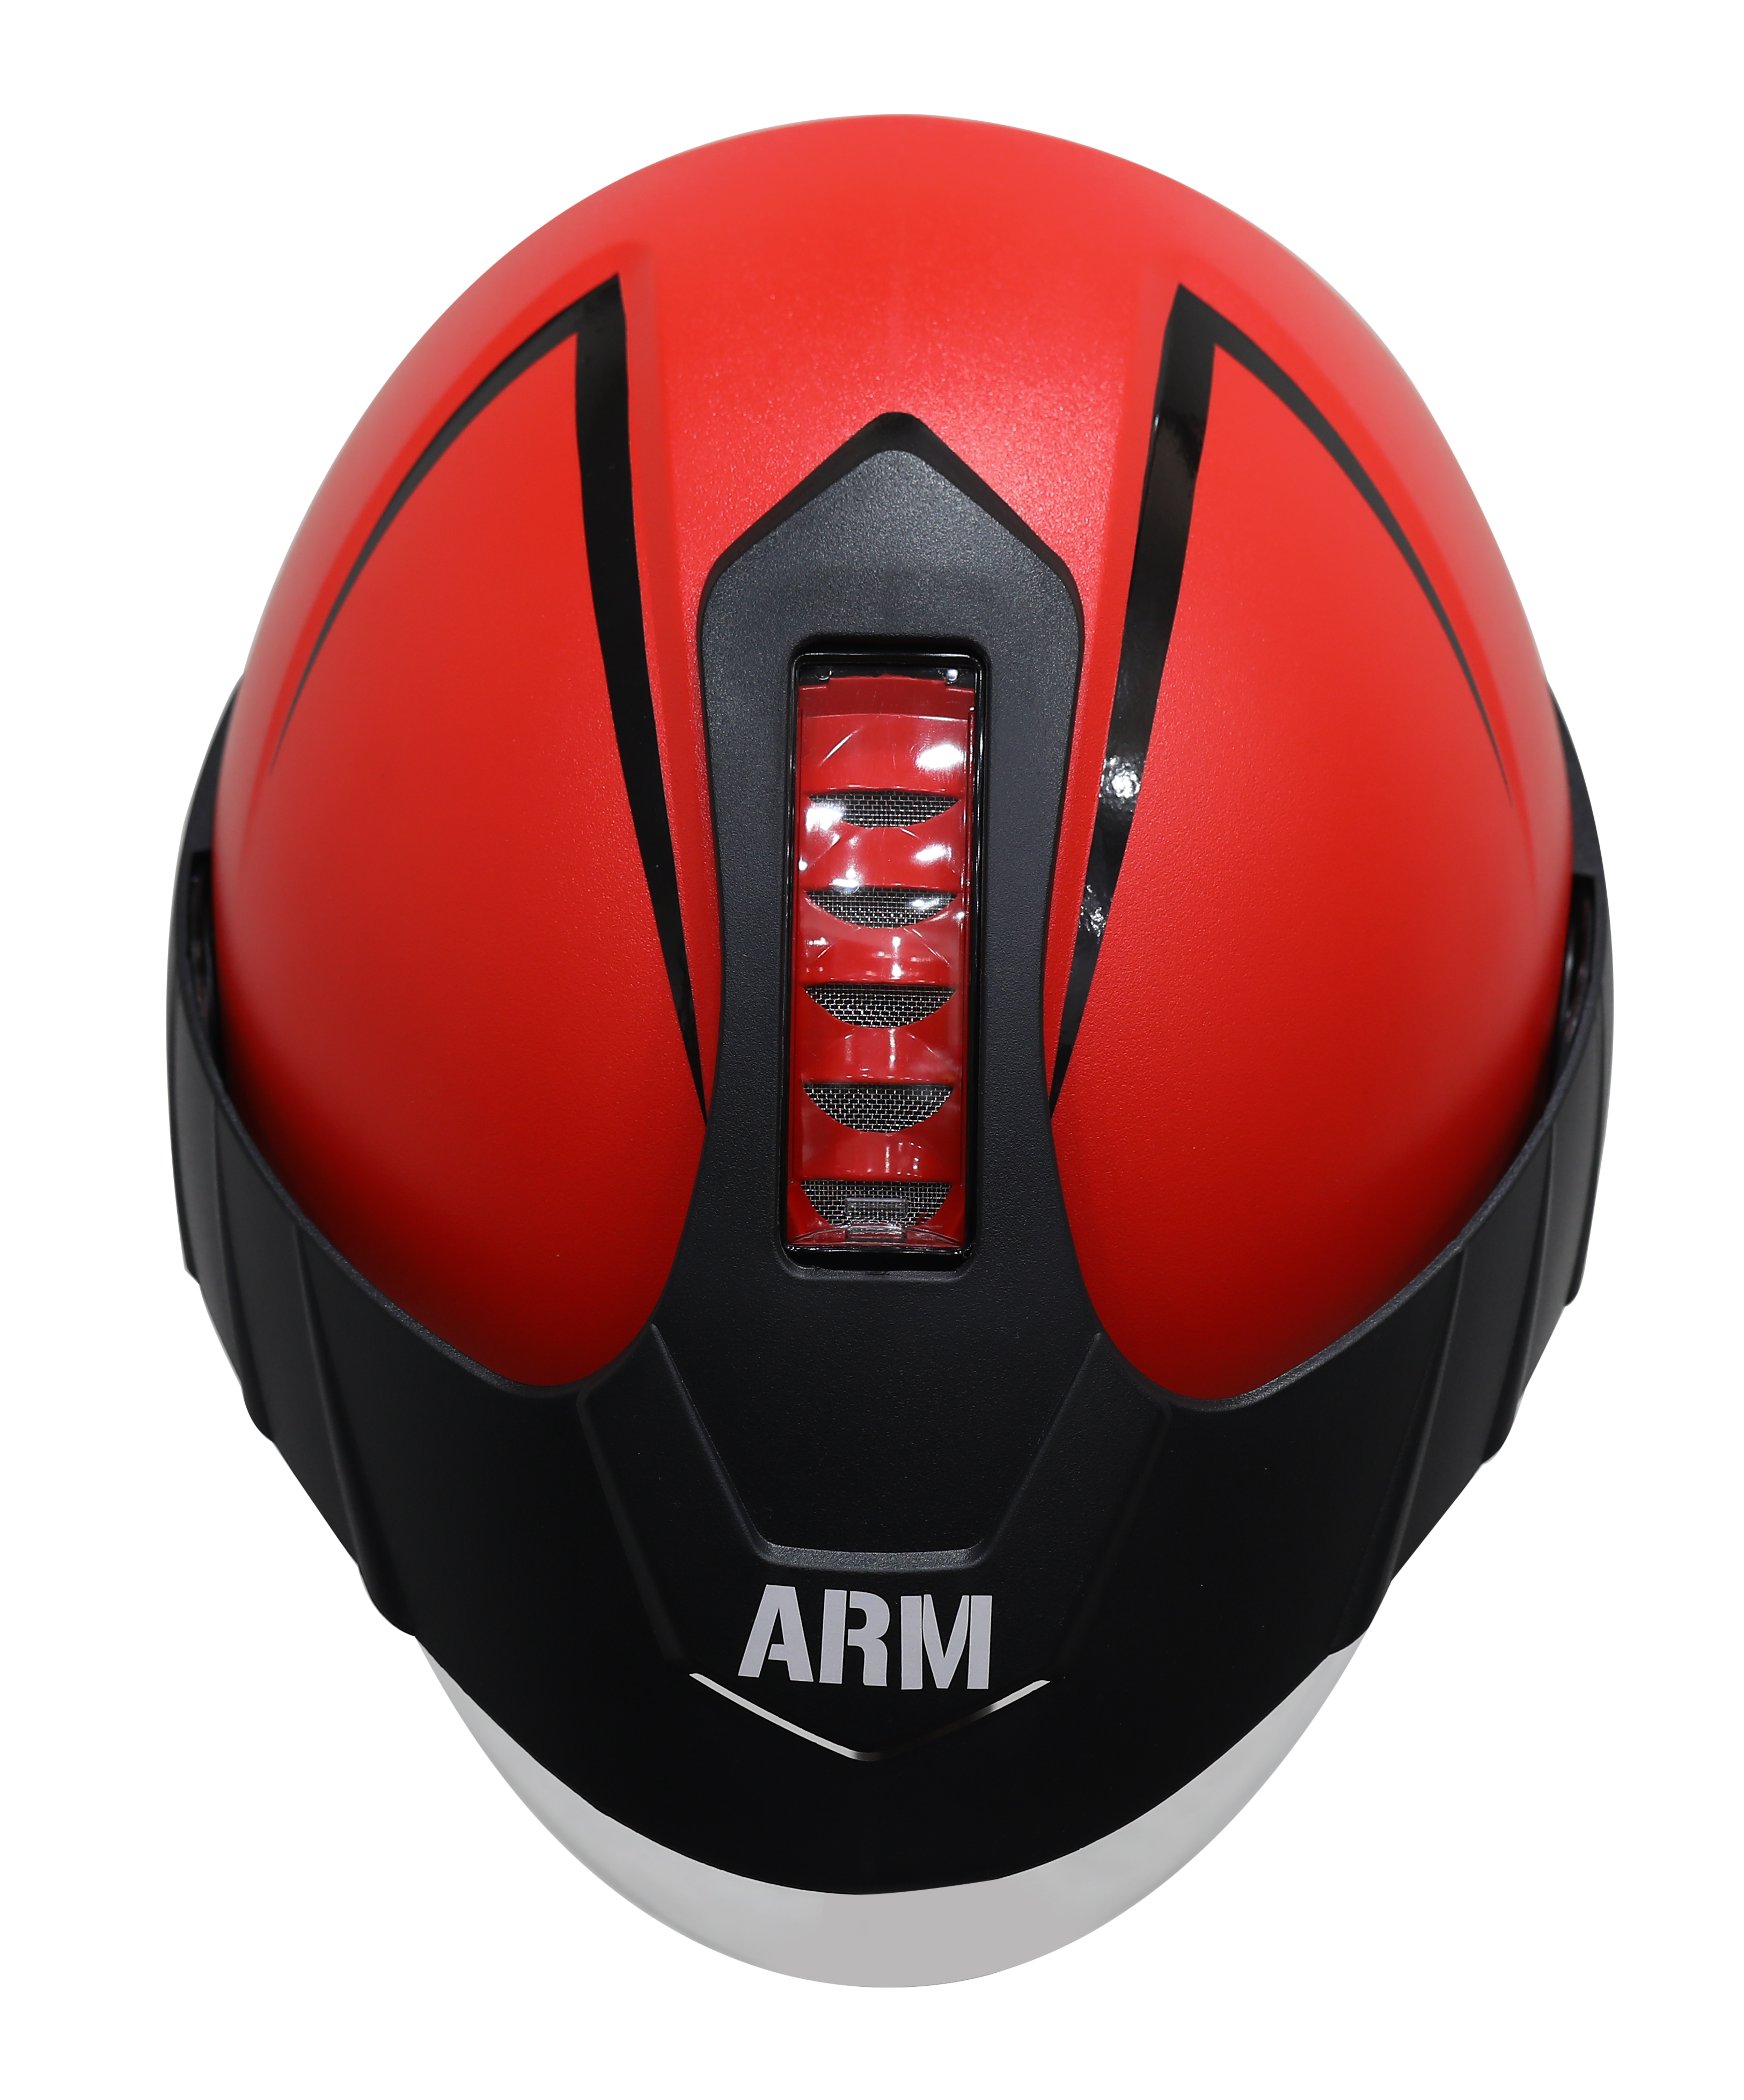 SB-33 ARM Reflective Dashing Red With Peak